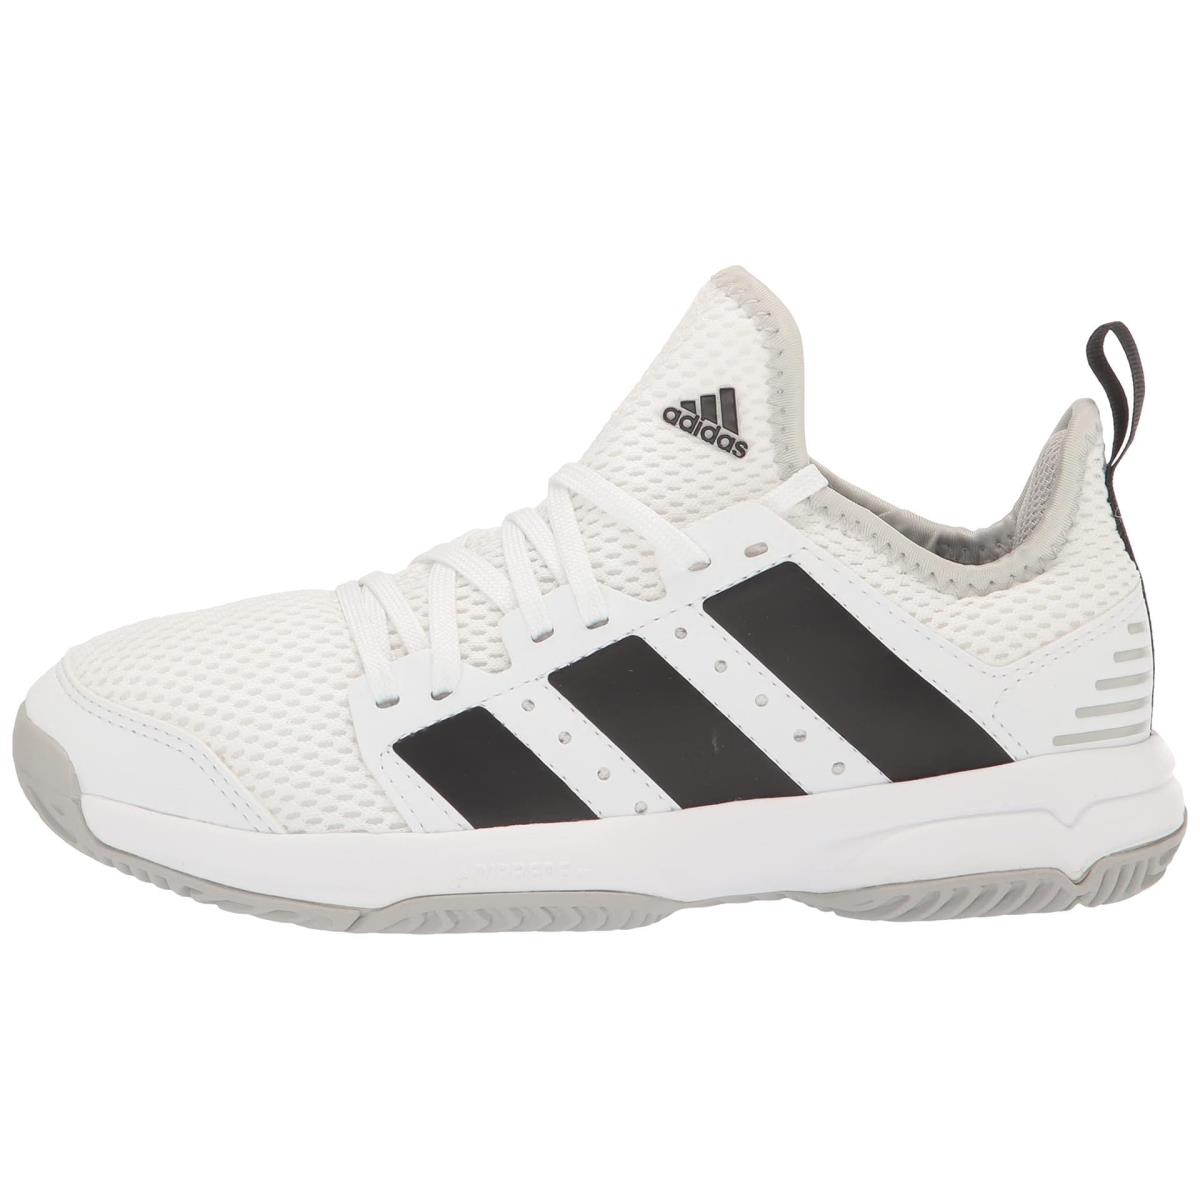 Adidas Unisex-child Stabil Indoor Running Shoe White/Black/Grey